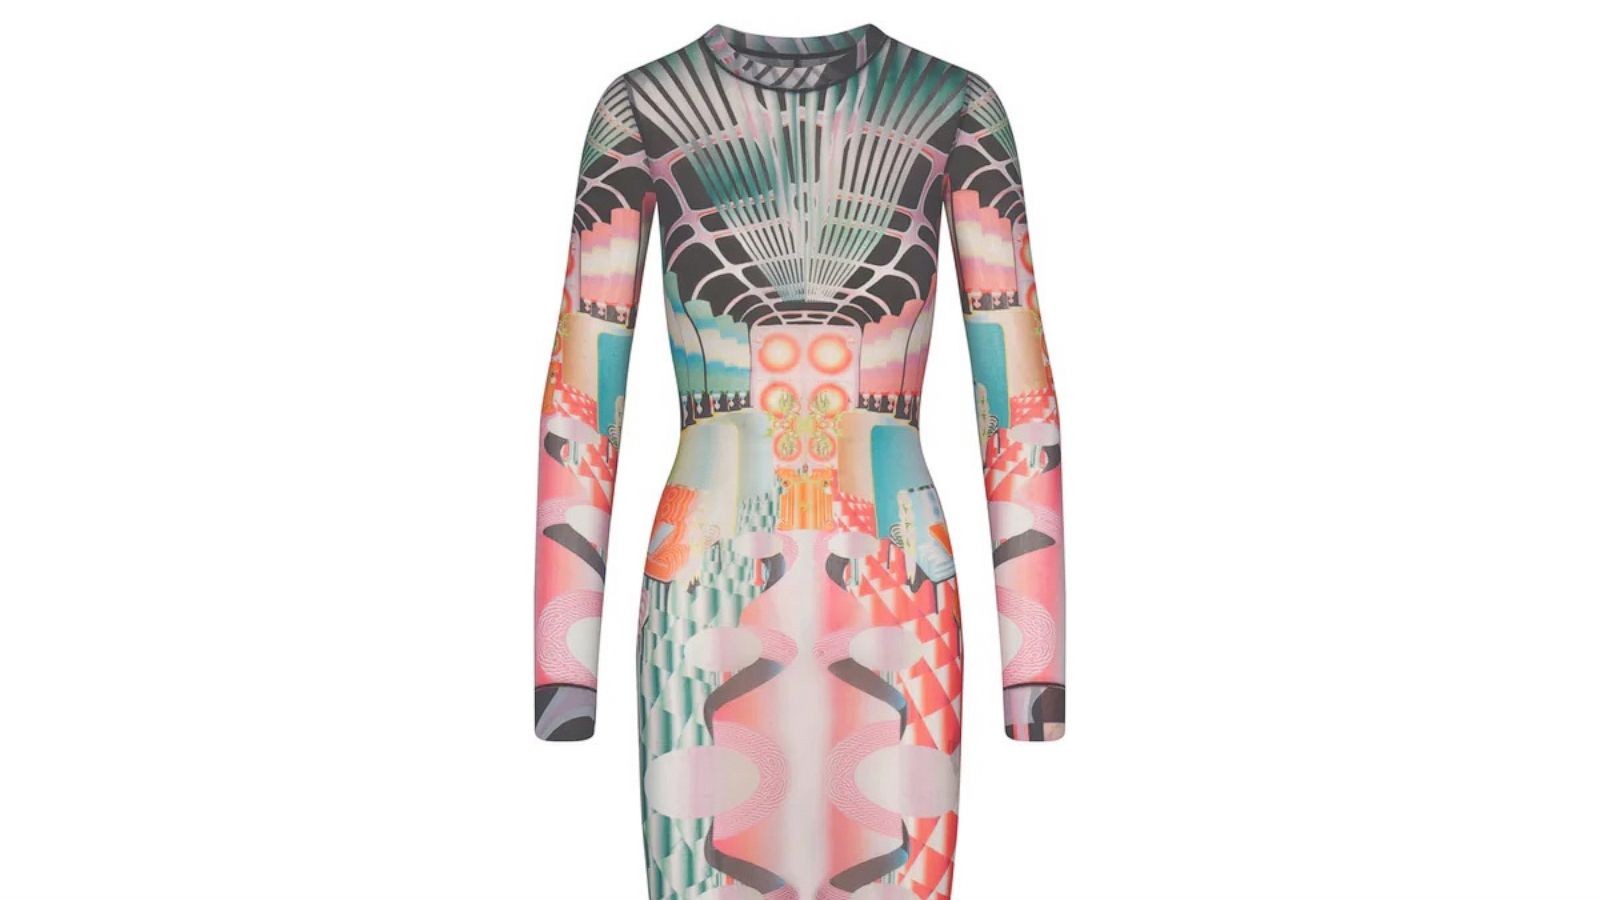 Shop new summer styles from Kim Kardashian's SKIMS mesh collection